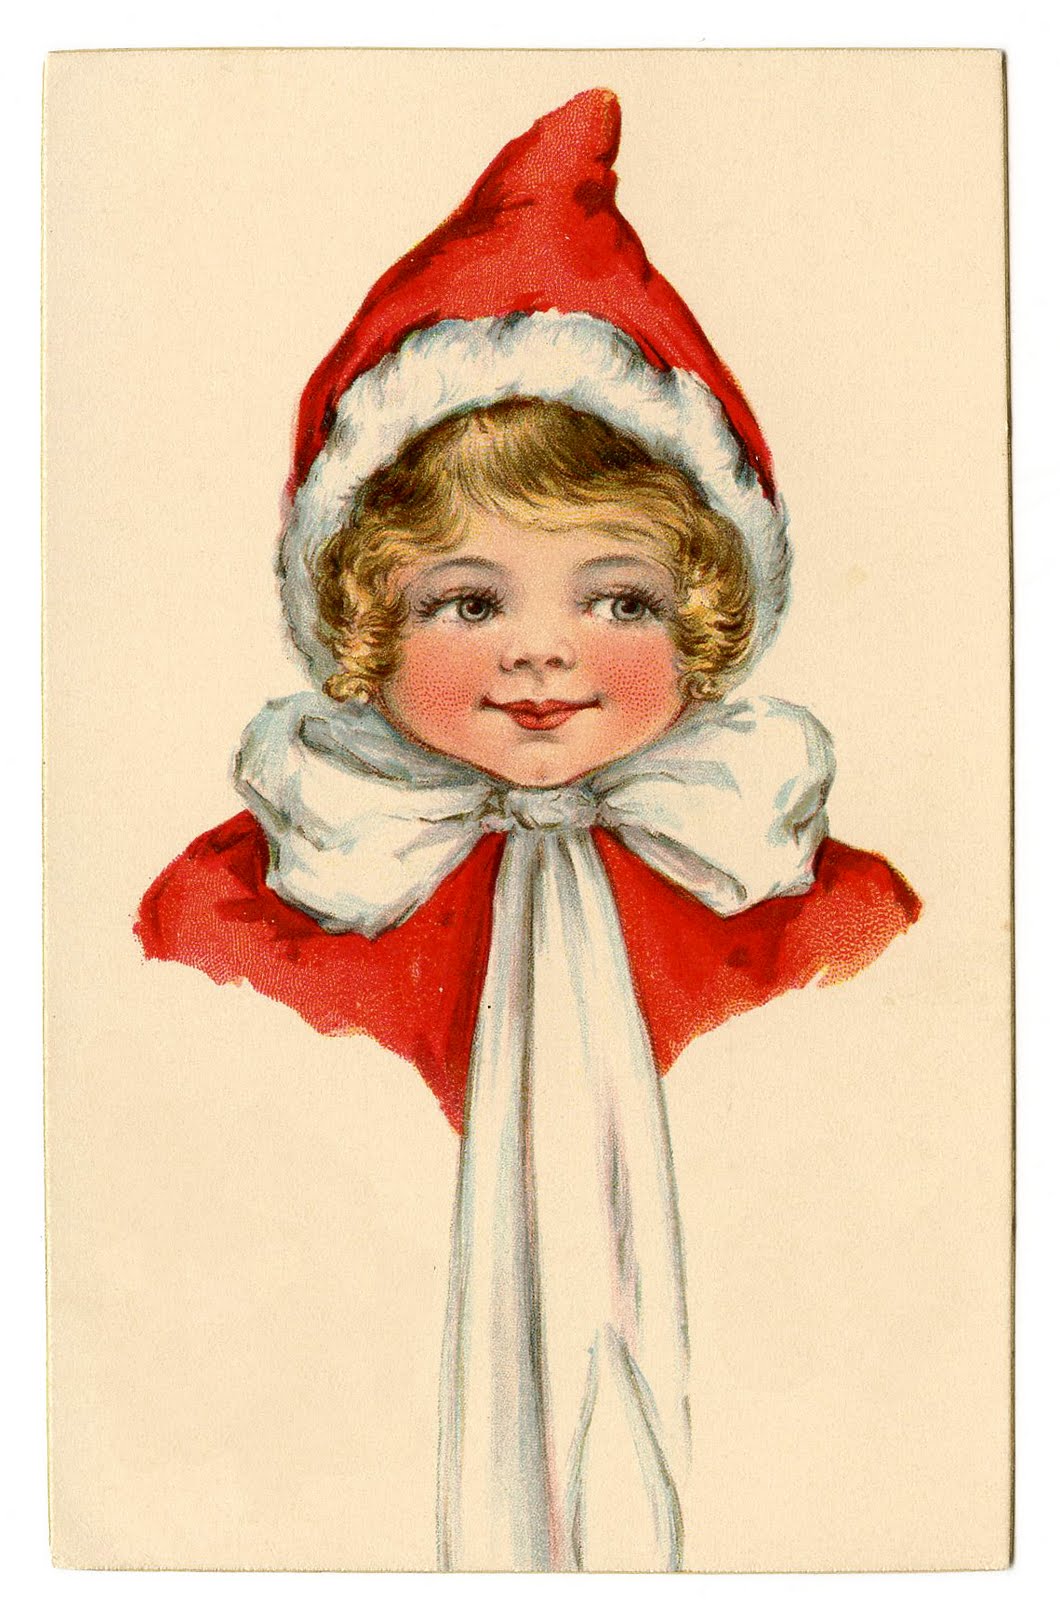 Vintage Christmas Clip Art - Adorable Elf Girl - The Graphics Fairy